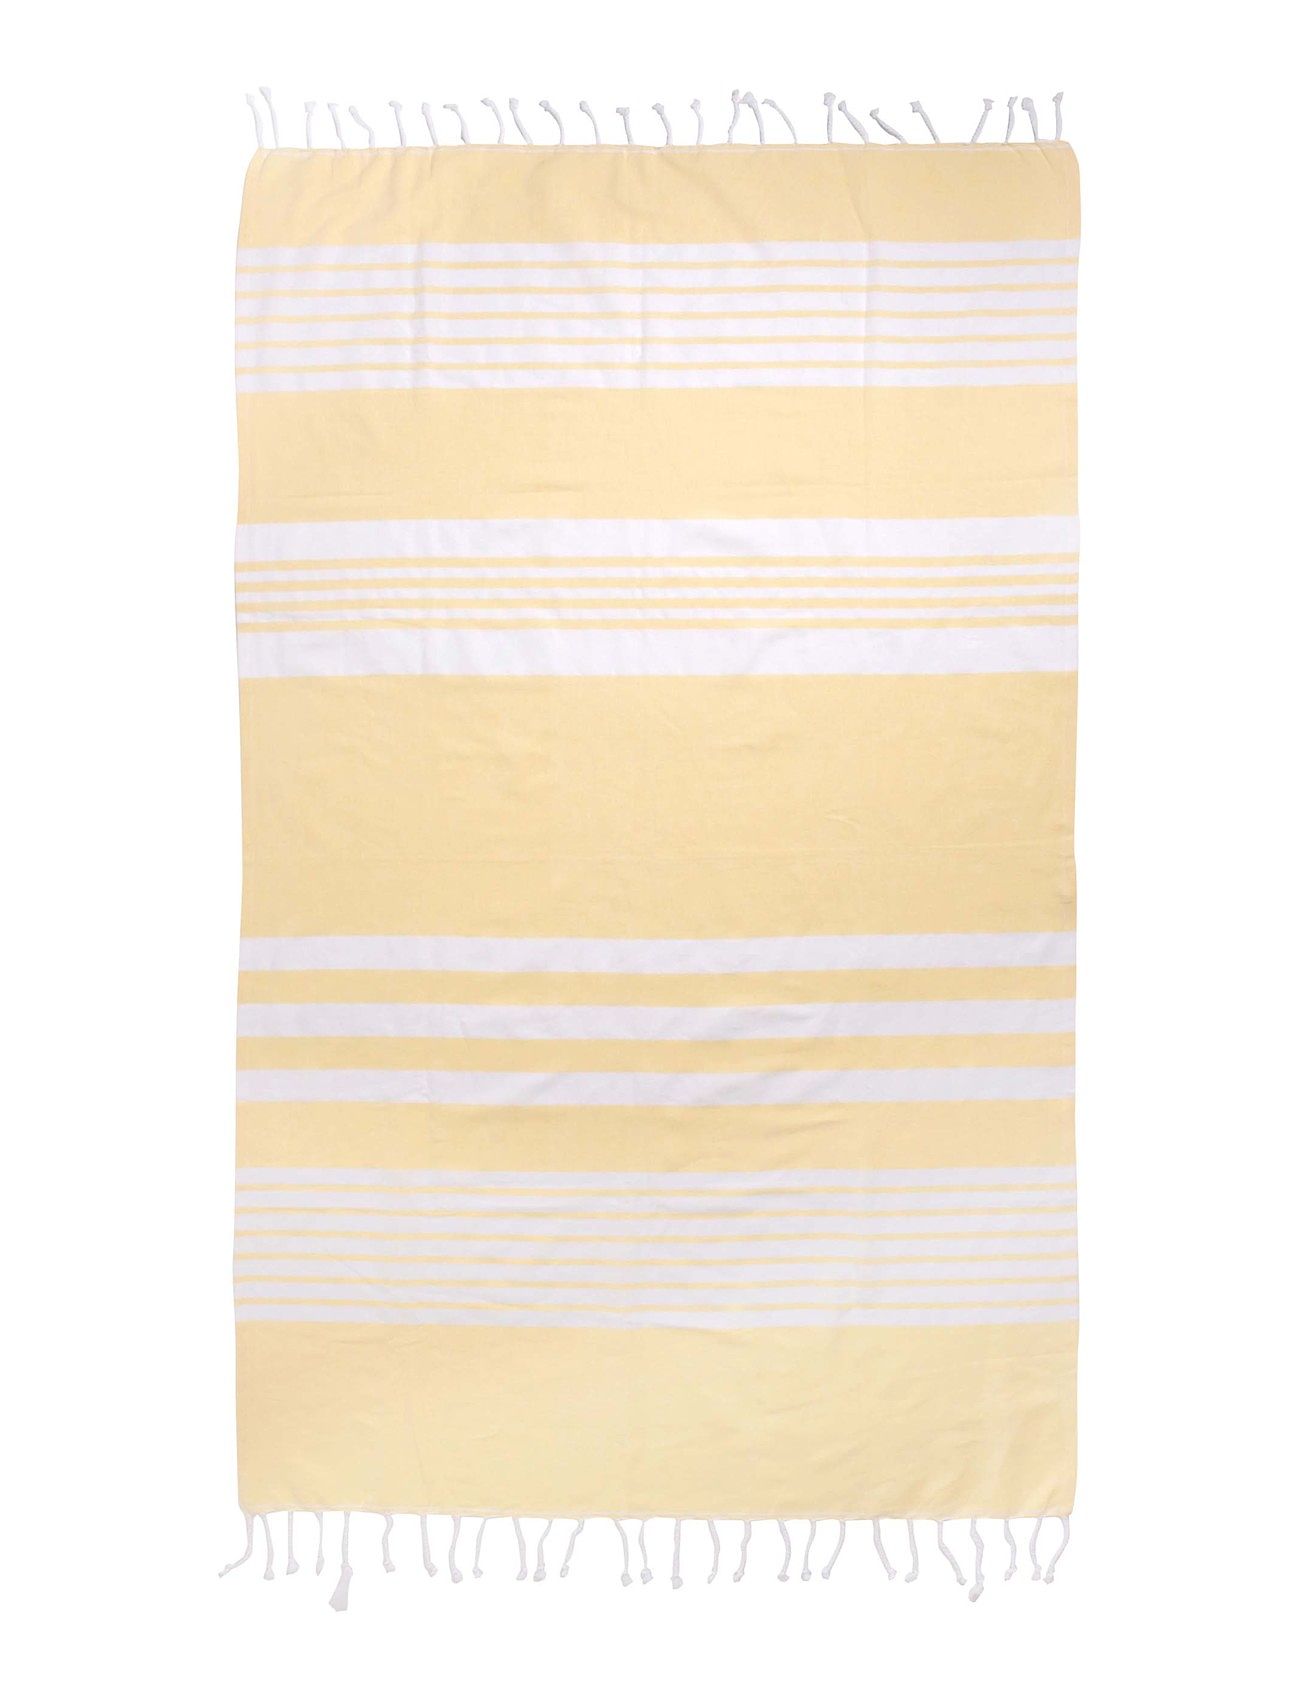 Ella Hamam Home Textiles Bathroom Textiles Towels & Bath Towels Bath Towels Yellow Sagaform